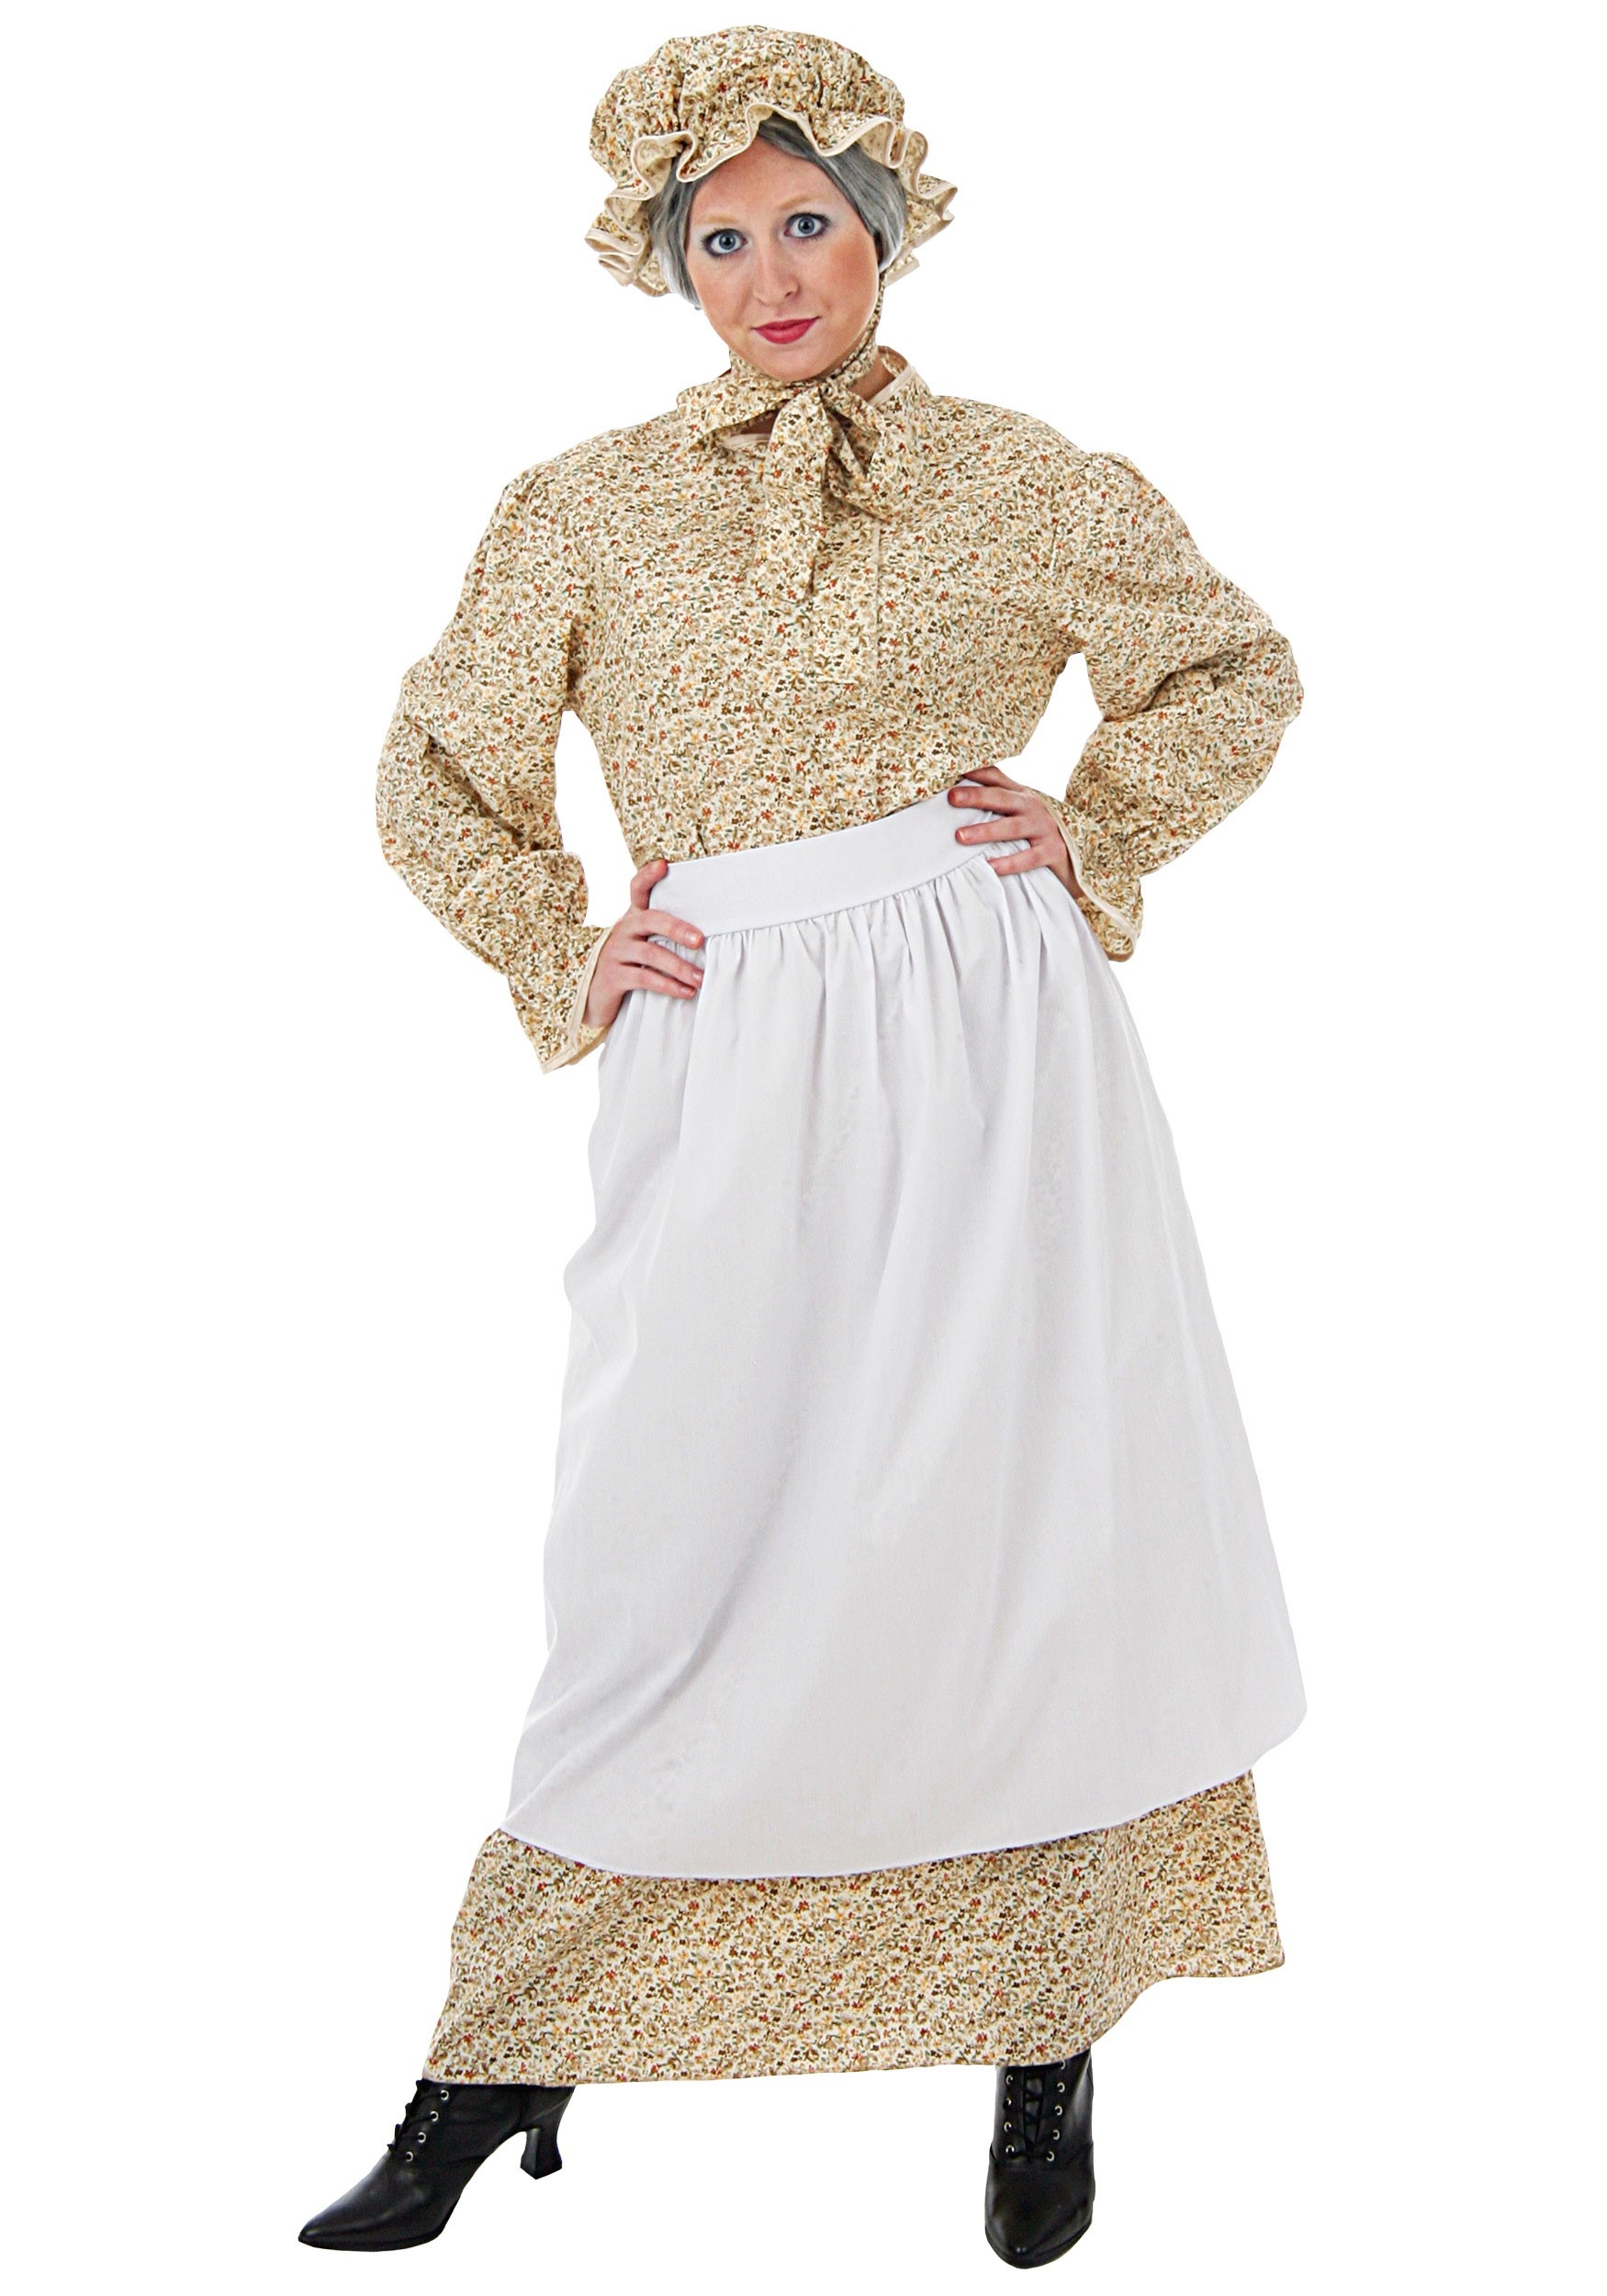 Photos - Fancy Dress Winsun Dress FUN Costumes Women's Plus Size Auntie Em Costume Dress Beige/White 